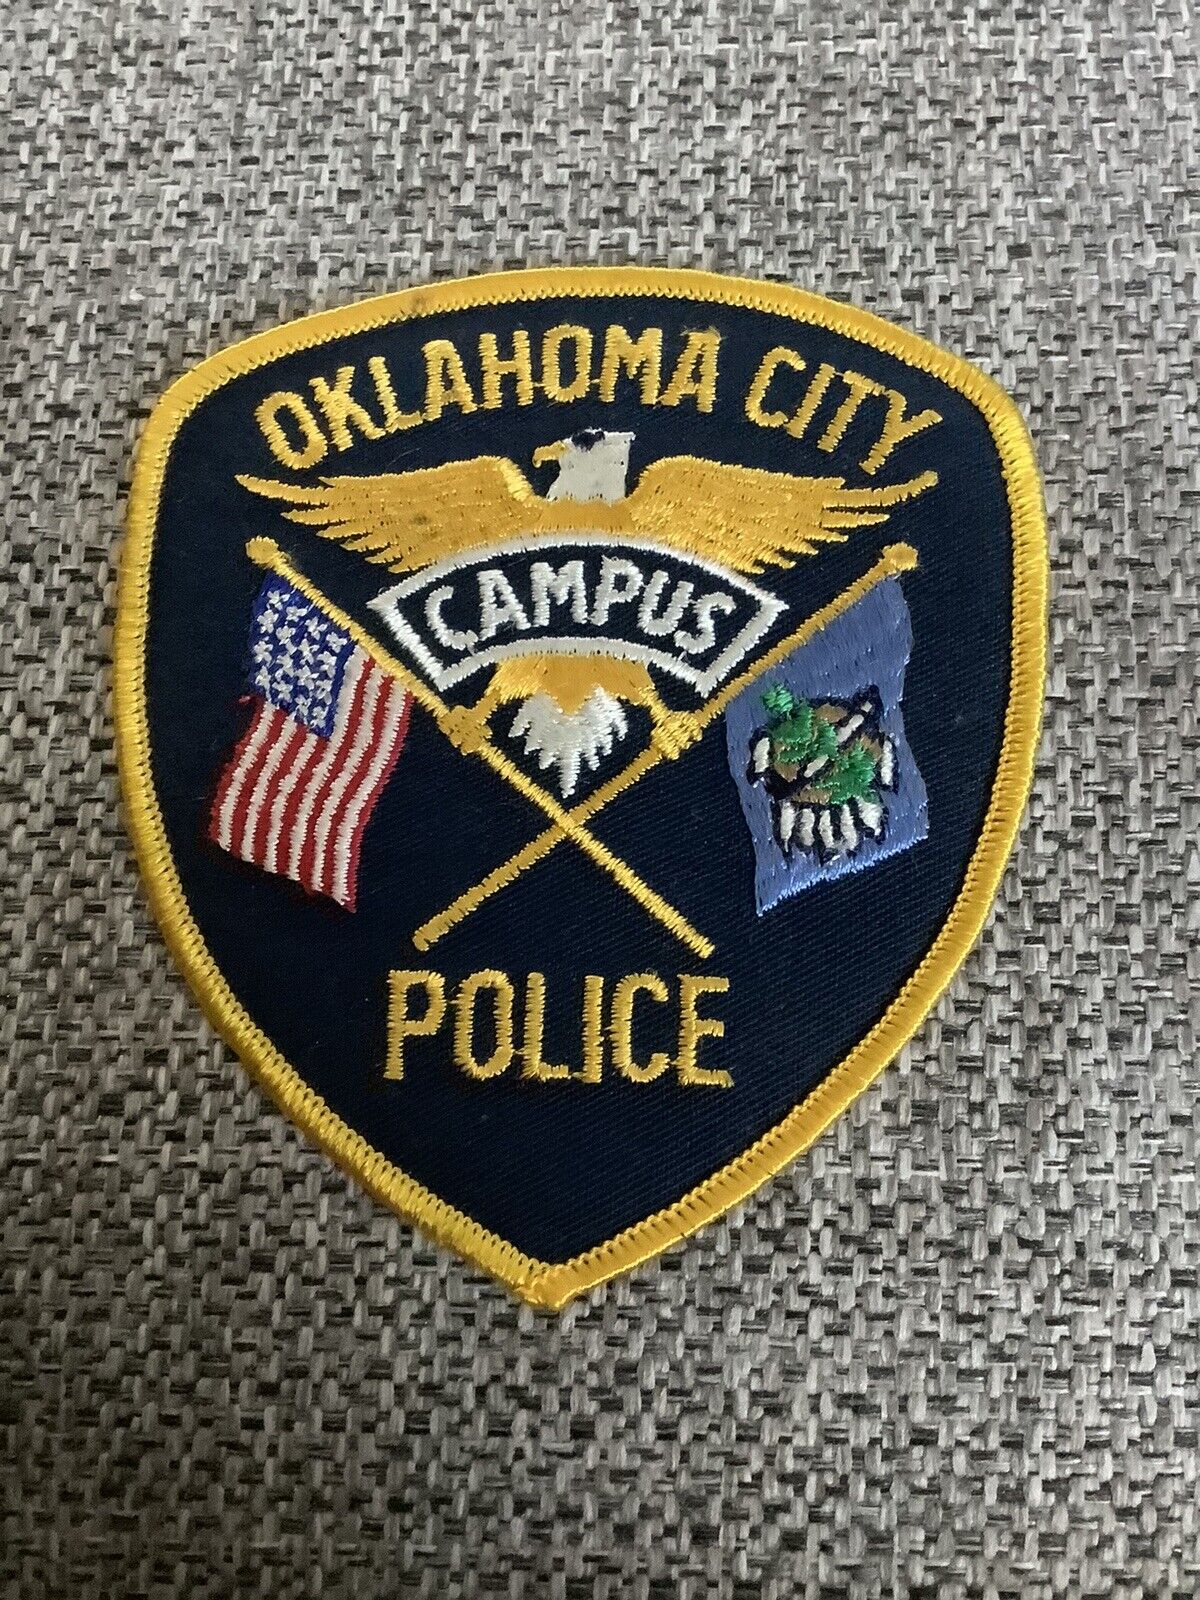 Oklahoma City Campus Police Patch